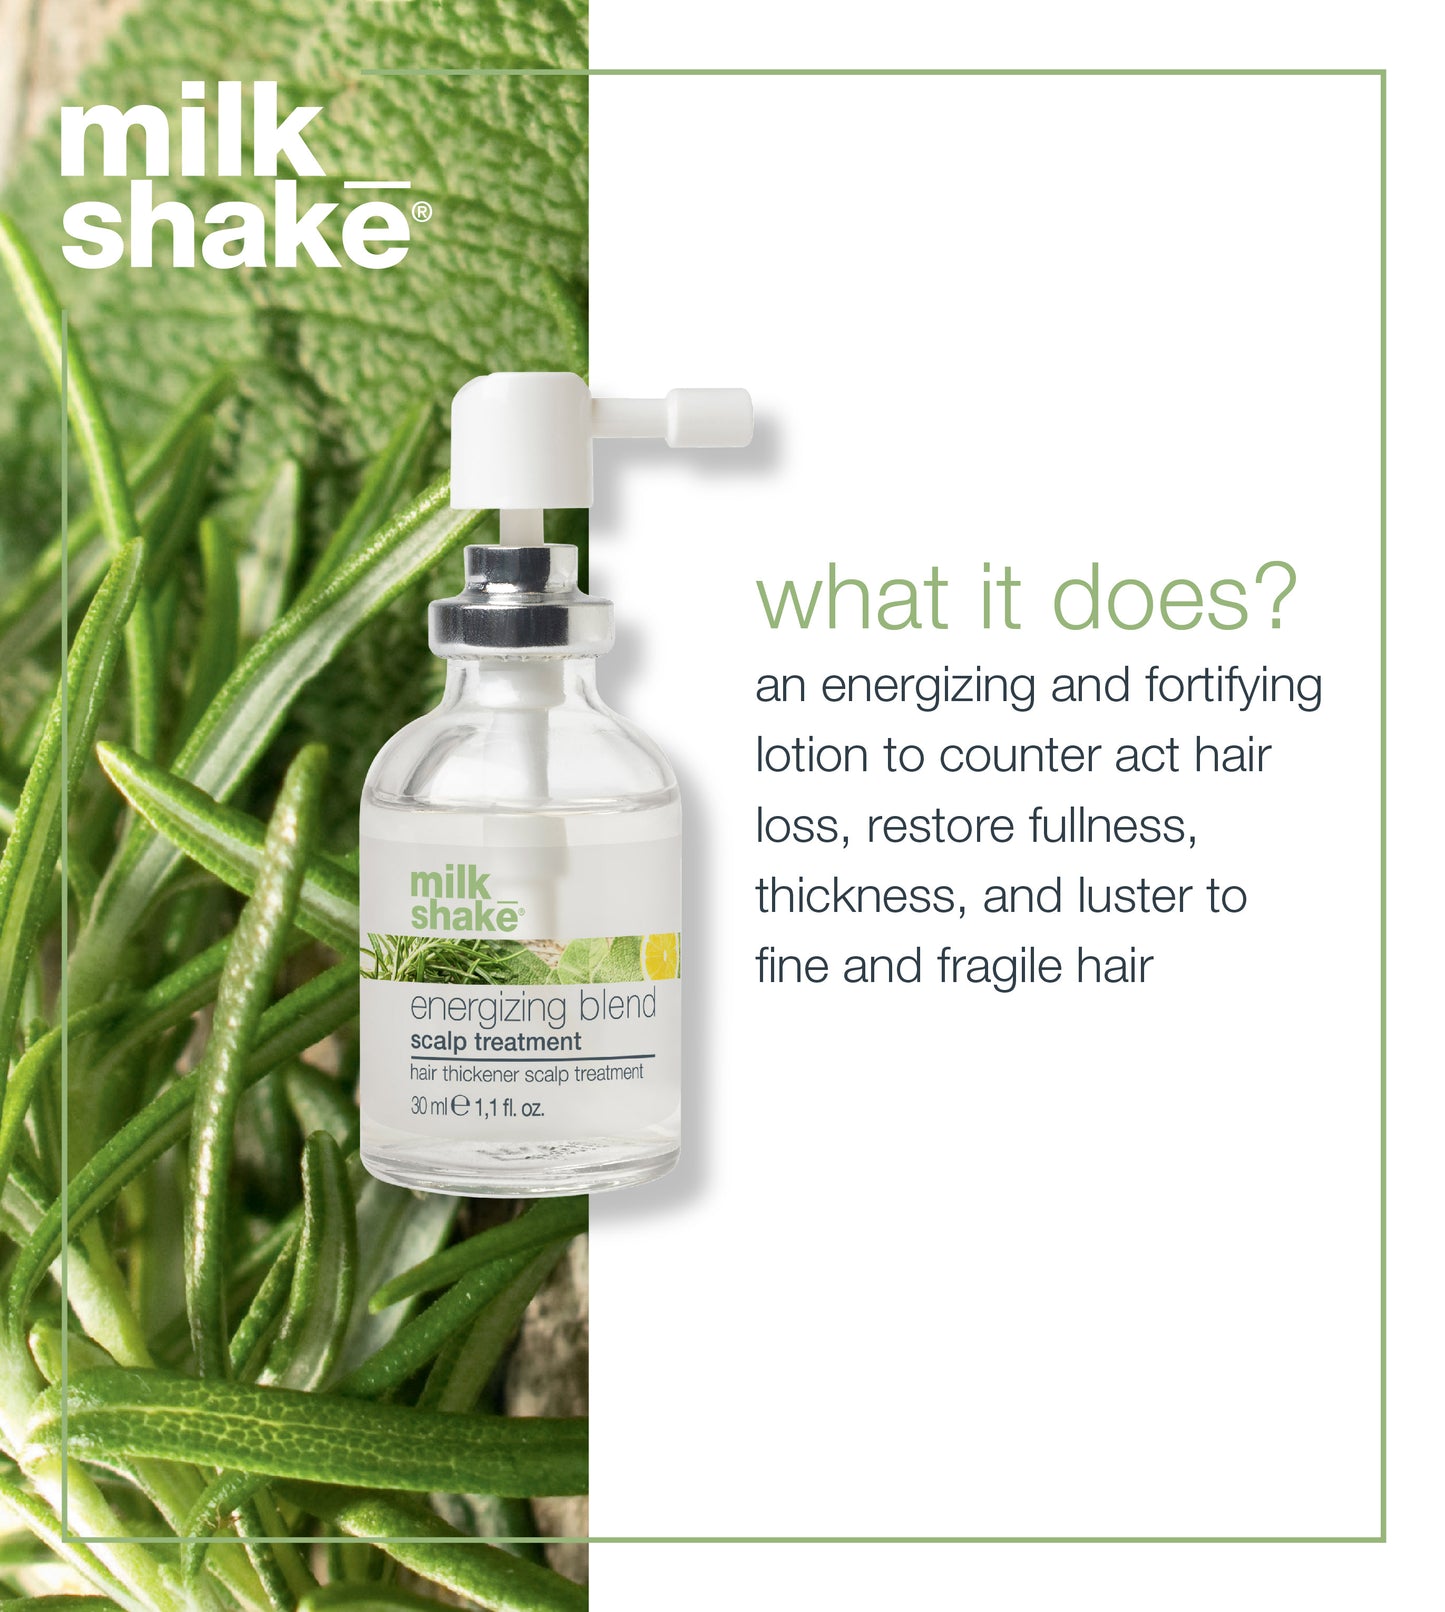 milk_shake energizing  blend scalp treatment